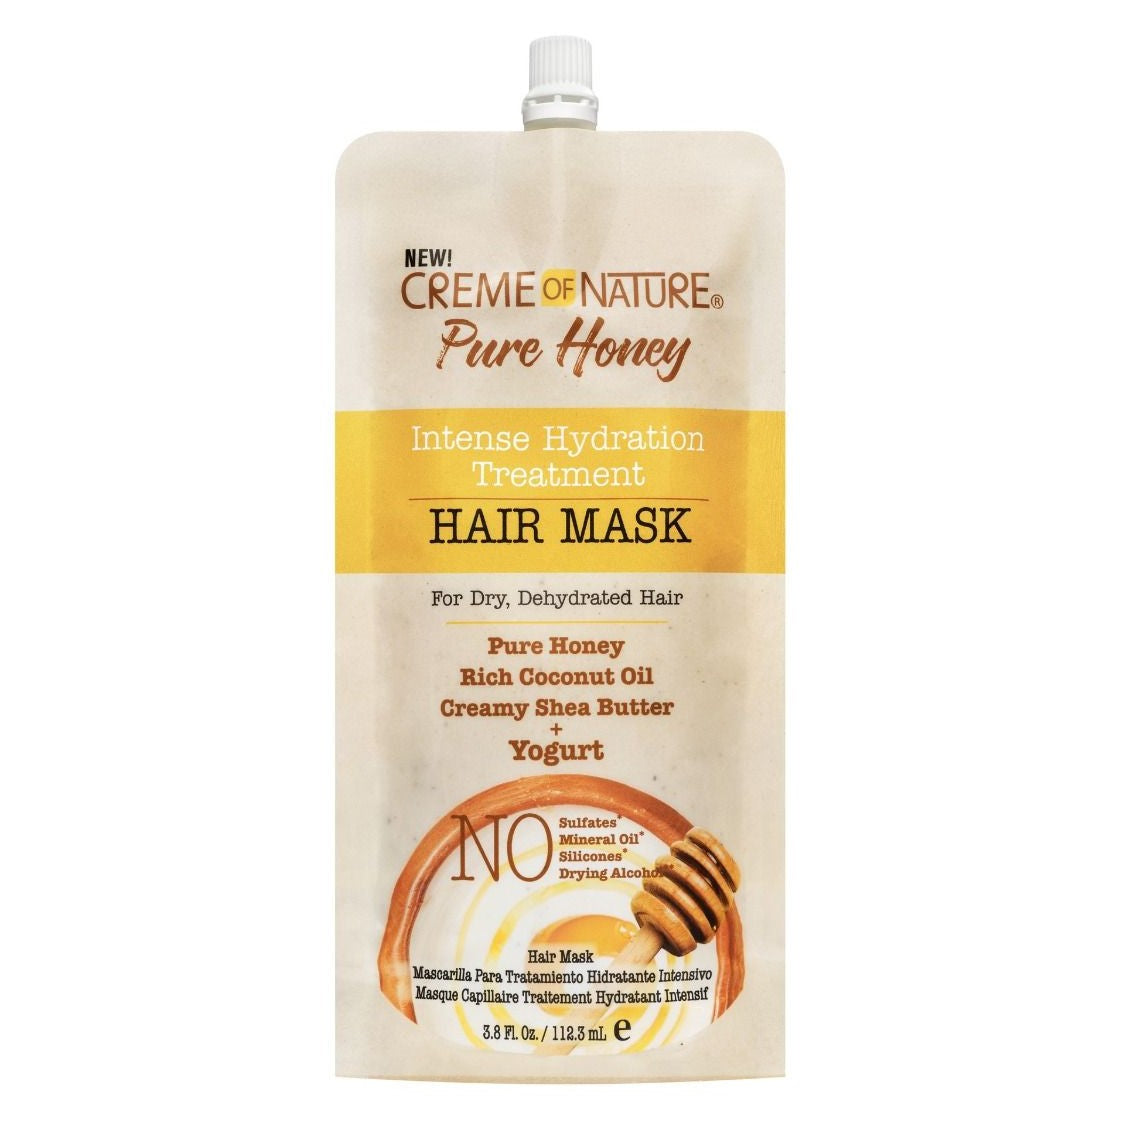 Creme of Nature Pure Honey Intense Hydration Treatment Hair Mask - Yogurt 3.8oz